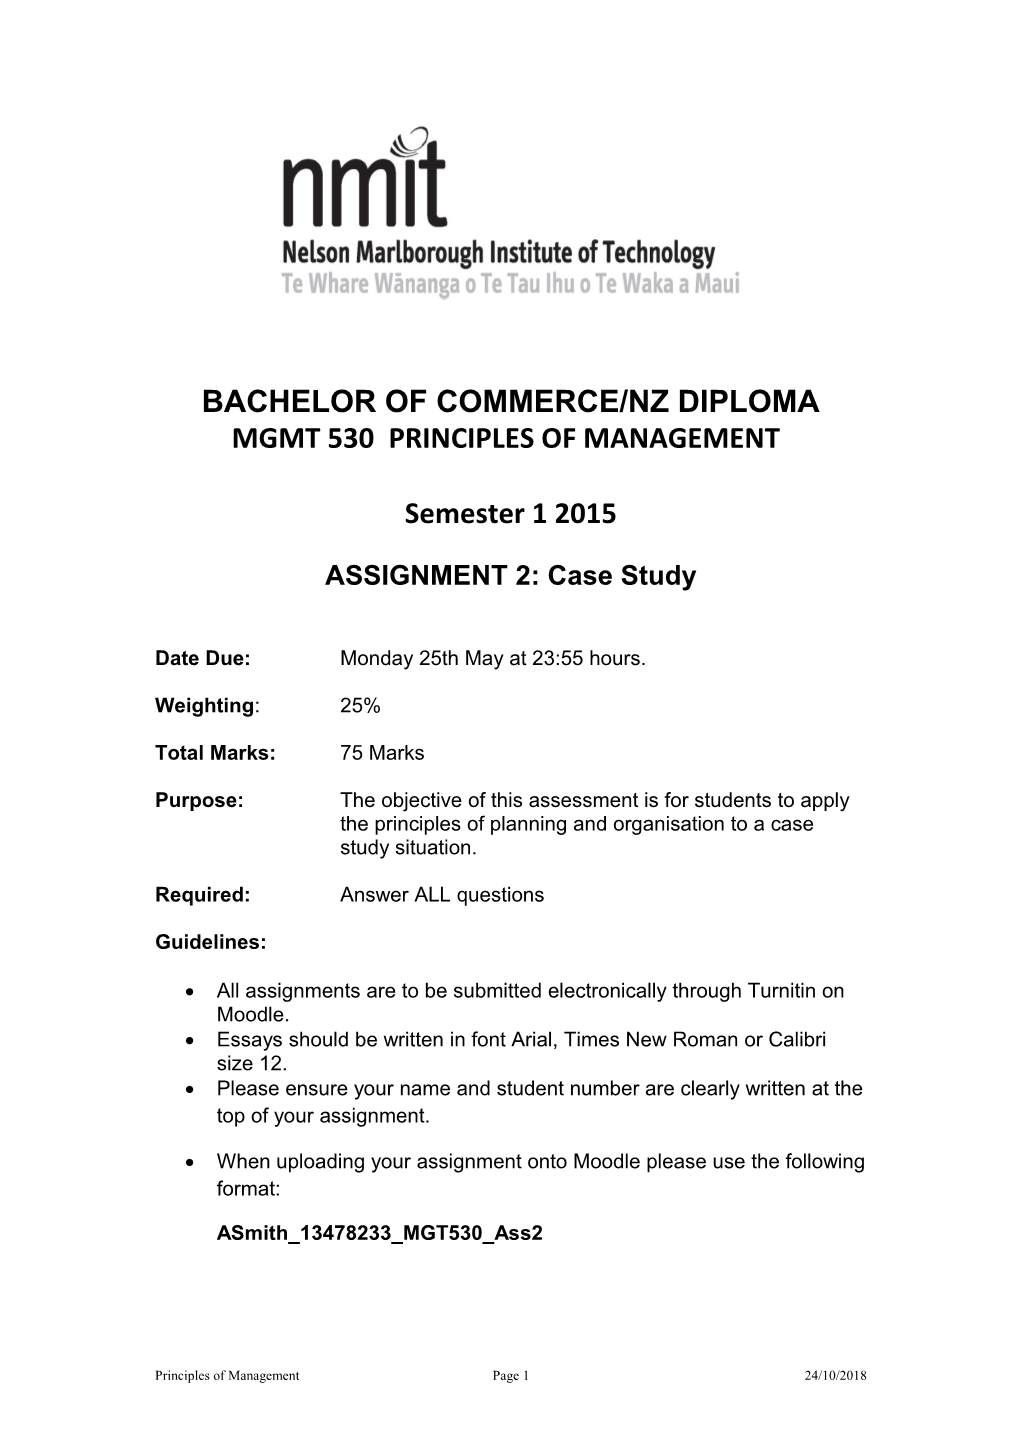 Bachelor of Commerce/Nz Diploma